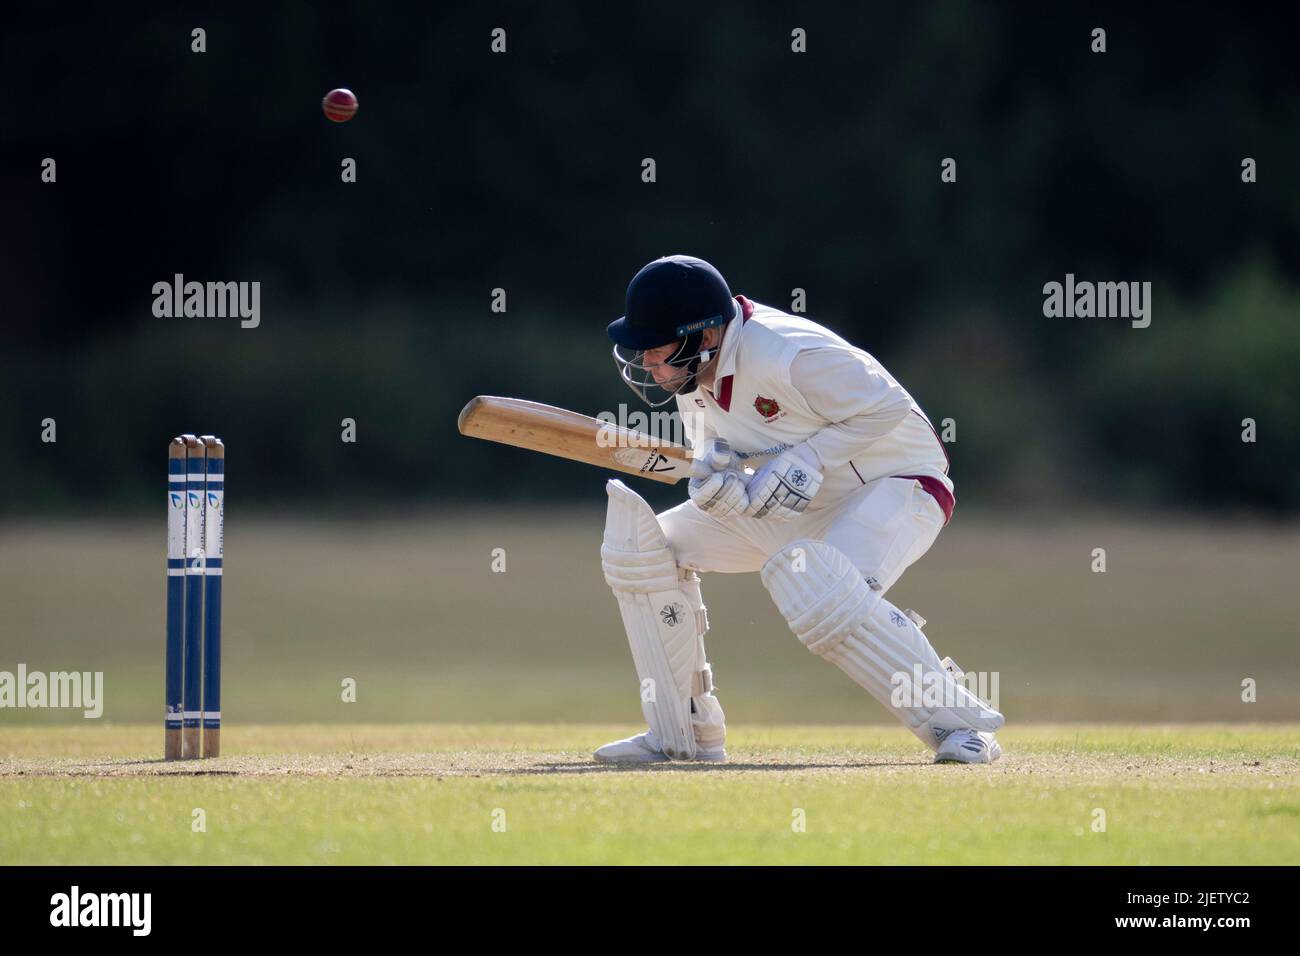 Cricket batsman ducking from bowlerÕs bouncer Stock Photo